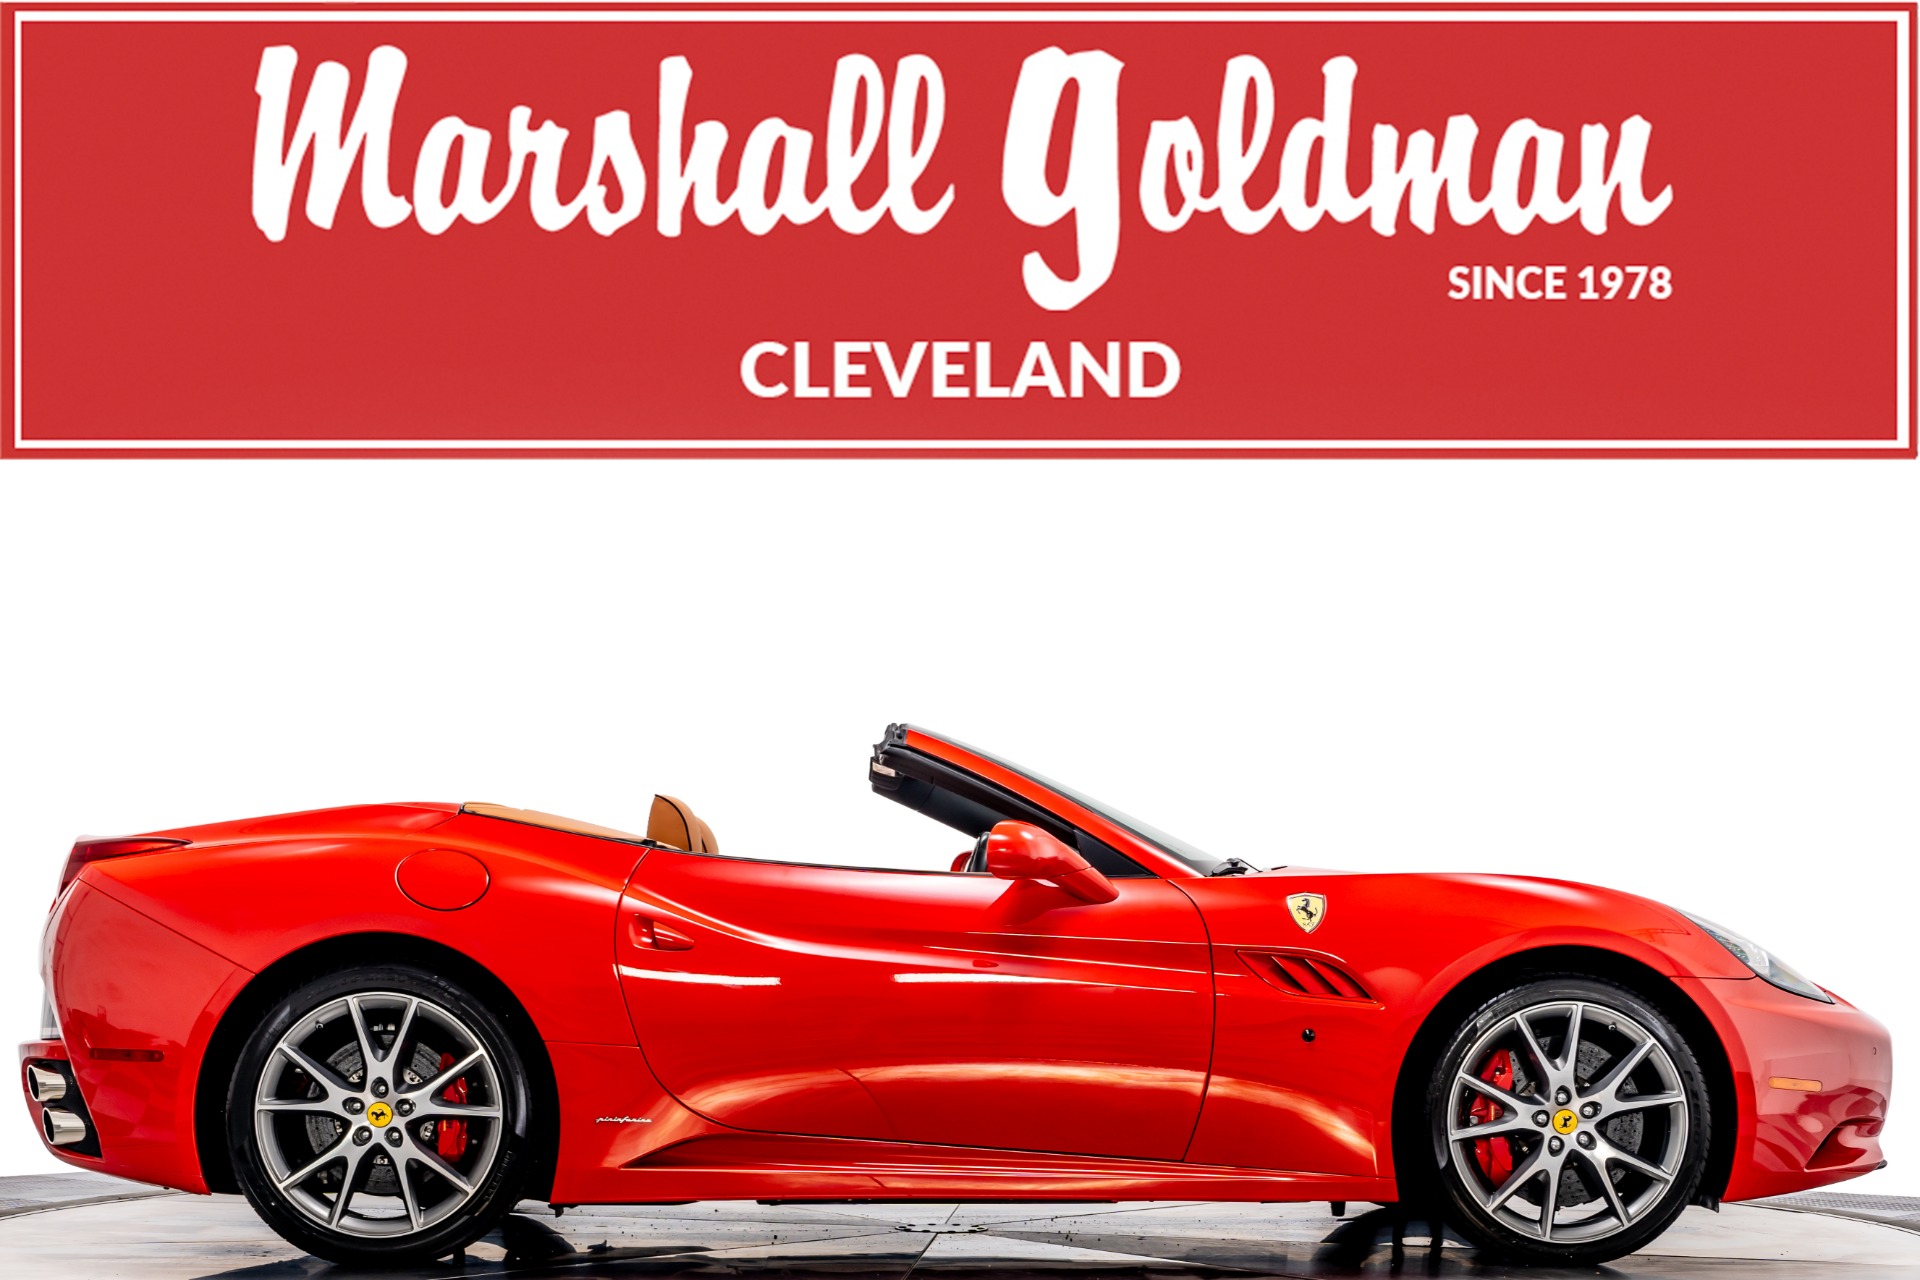 Used 2010 Ferrari California For Sale (Sold) | Marshall Goldman 